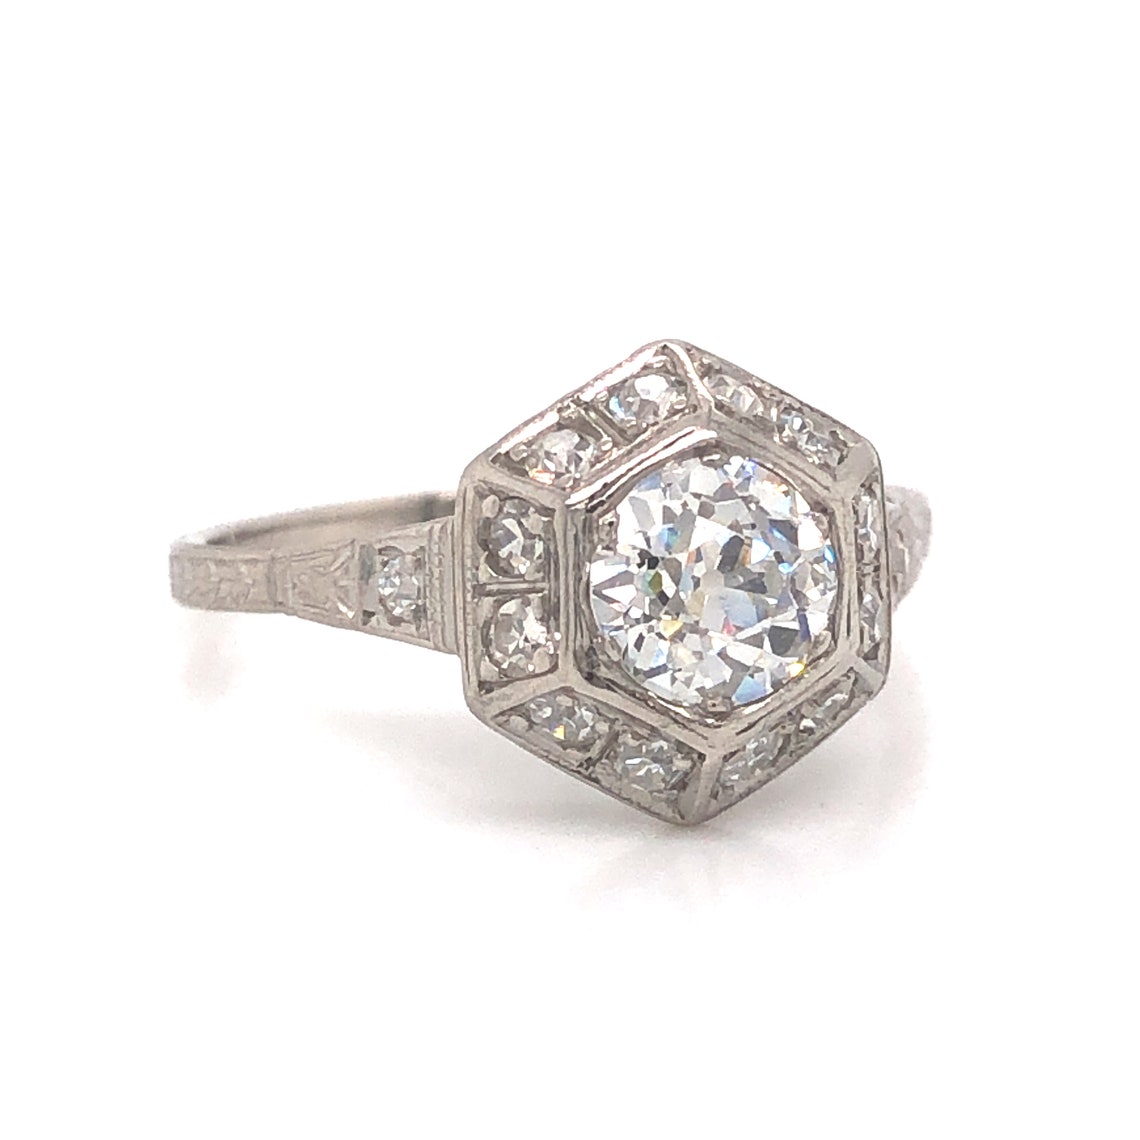 Vintage Art Deco Diamond Engagement Ring in Platinum - Etsy